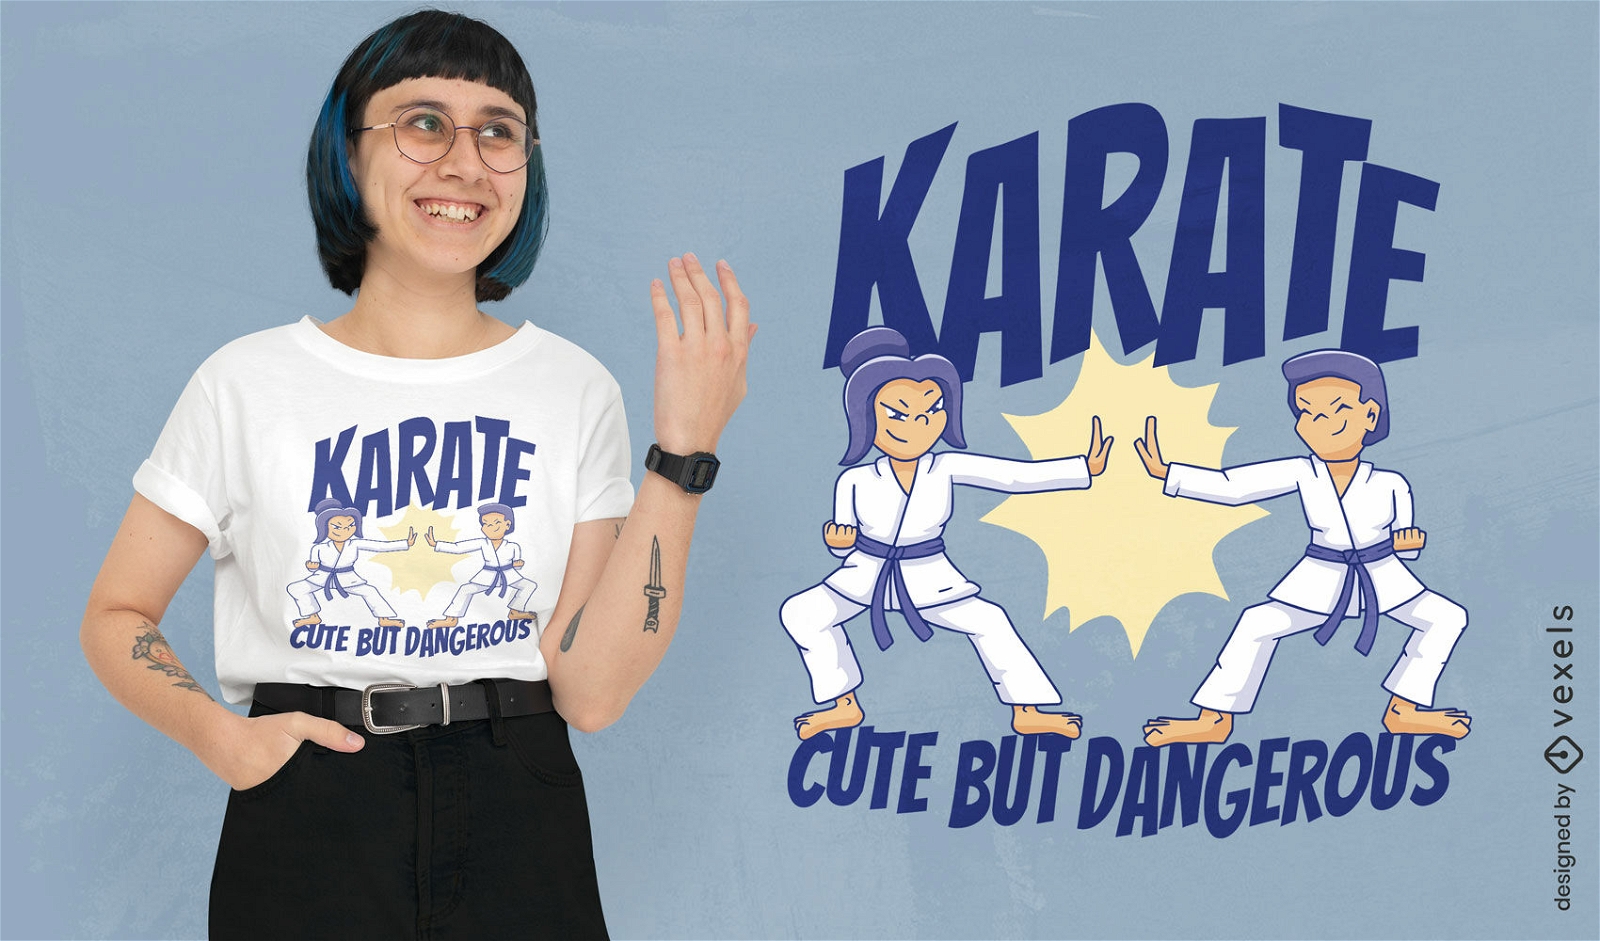 Cute karate t-shirt design